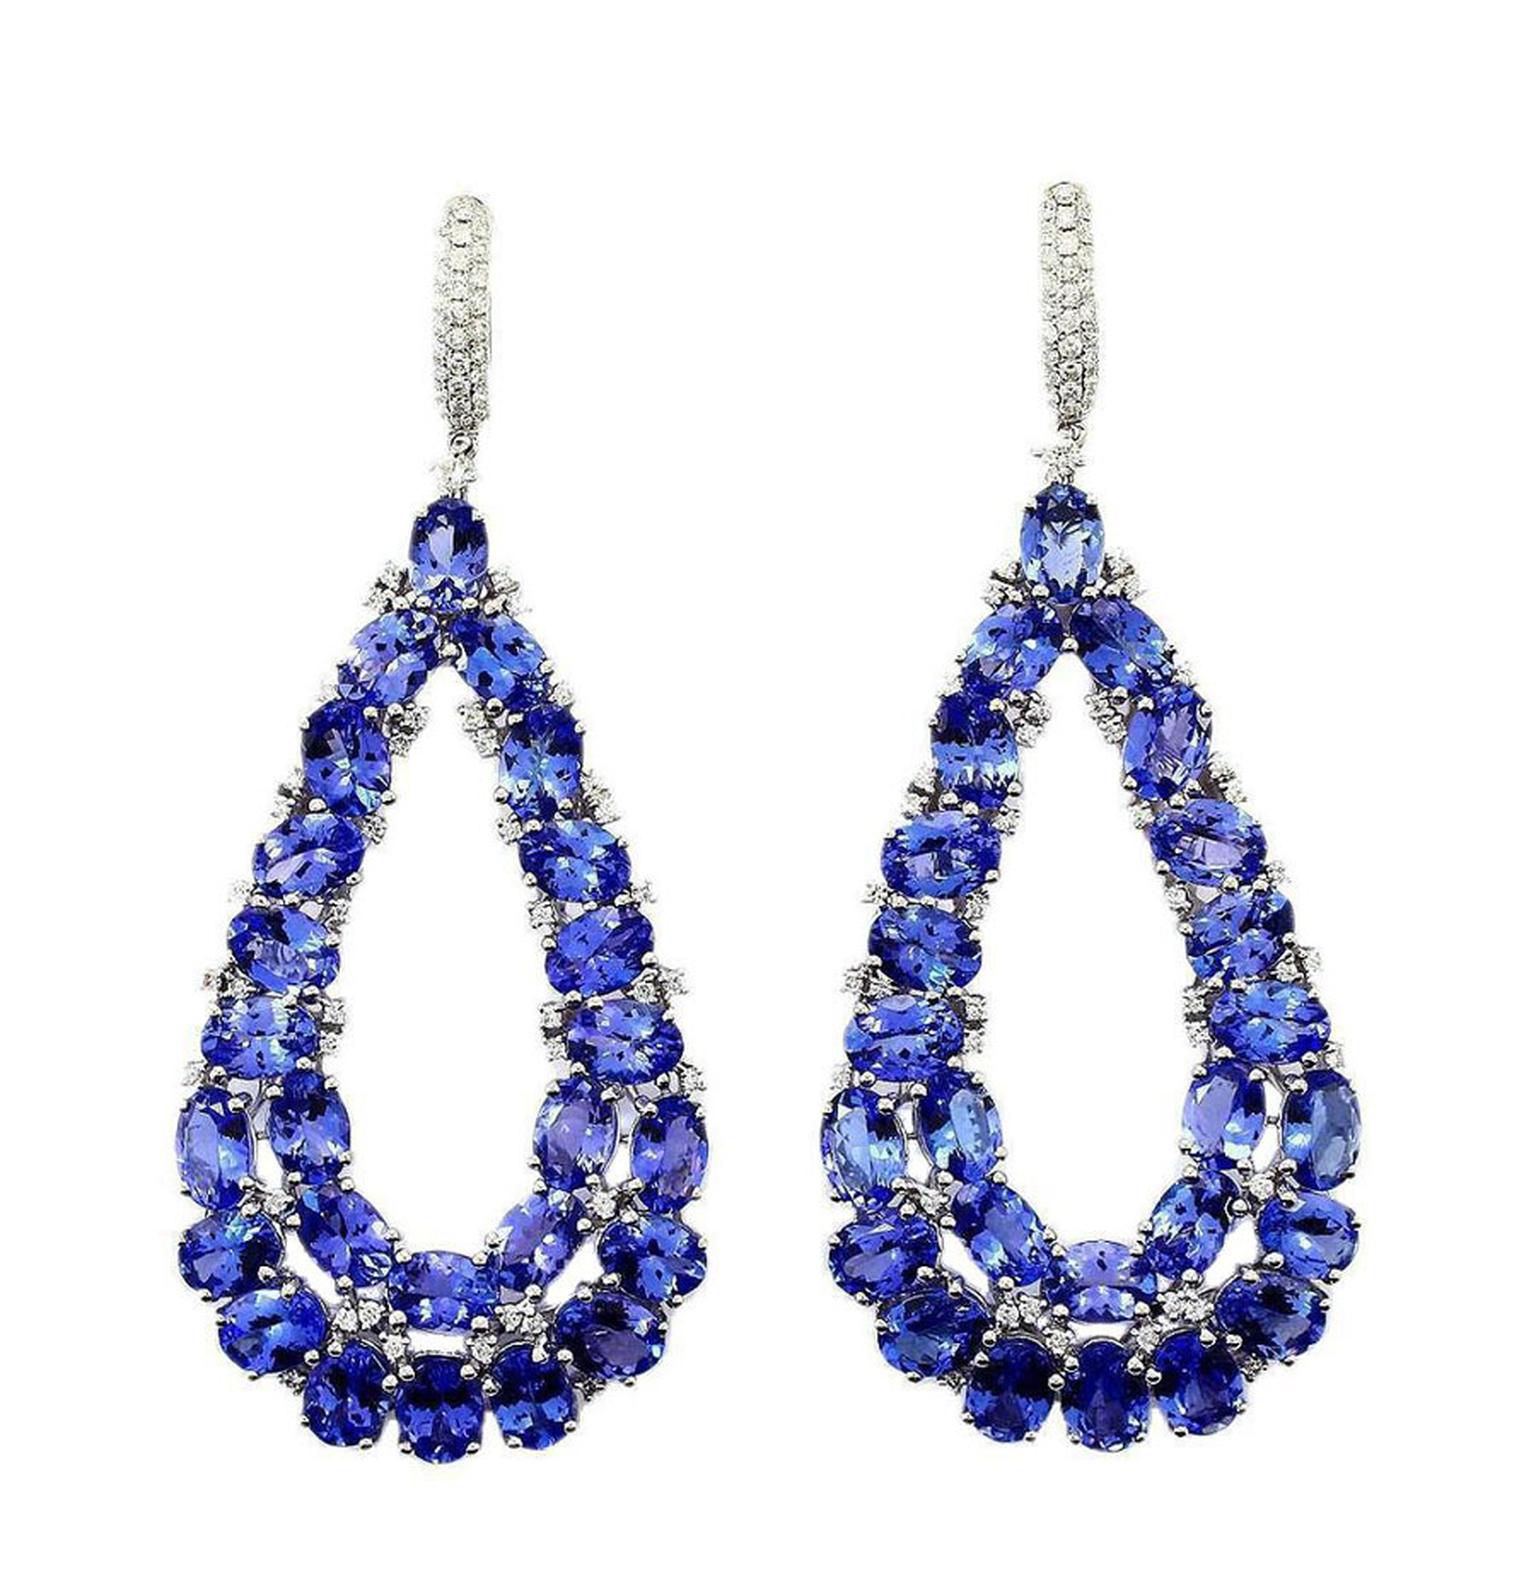 TanzaniteOne Empress earrings showcasing over 50 blue-violet tanzanite stones.